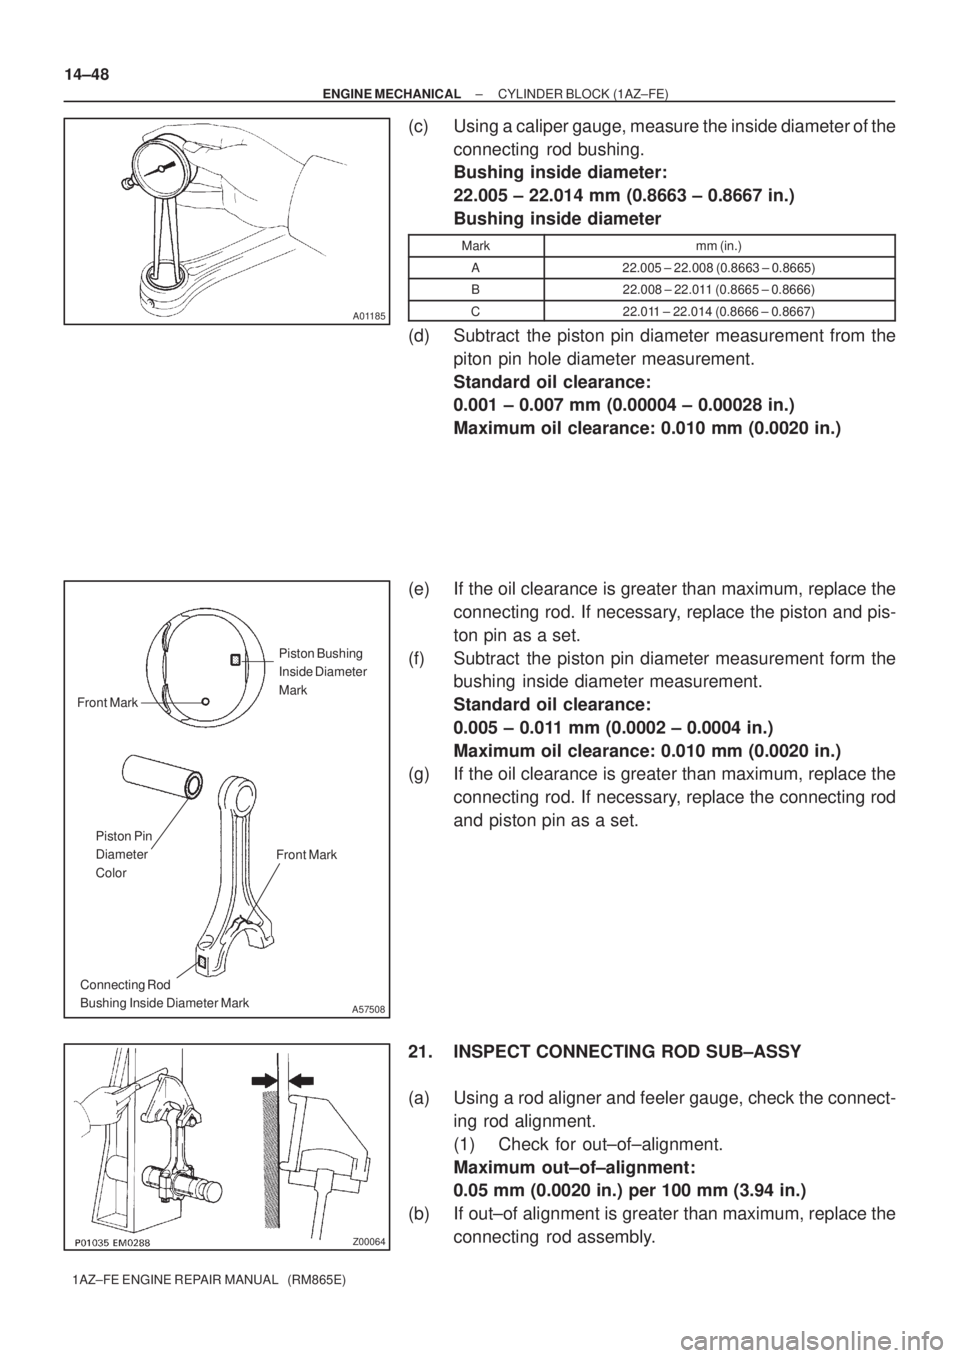 TOYOTA AVENSIS 2005  Service Repair Manual A01185
A57508
Piston Bushing
Inside Diameter
Mark
Piston Pin
Diameter 
Color
Connecting Rod
Bushing Inside Diameter Mark Front Mark
Front Mark
Z00064
14±48
± ENGINE MECHANICALCYLINDER BLOCK (1AZ±FE